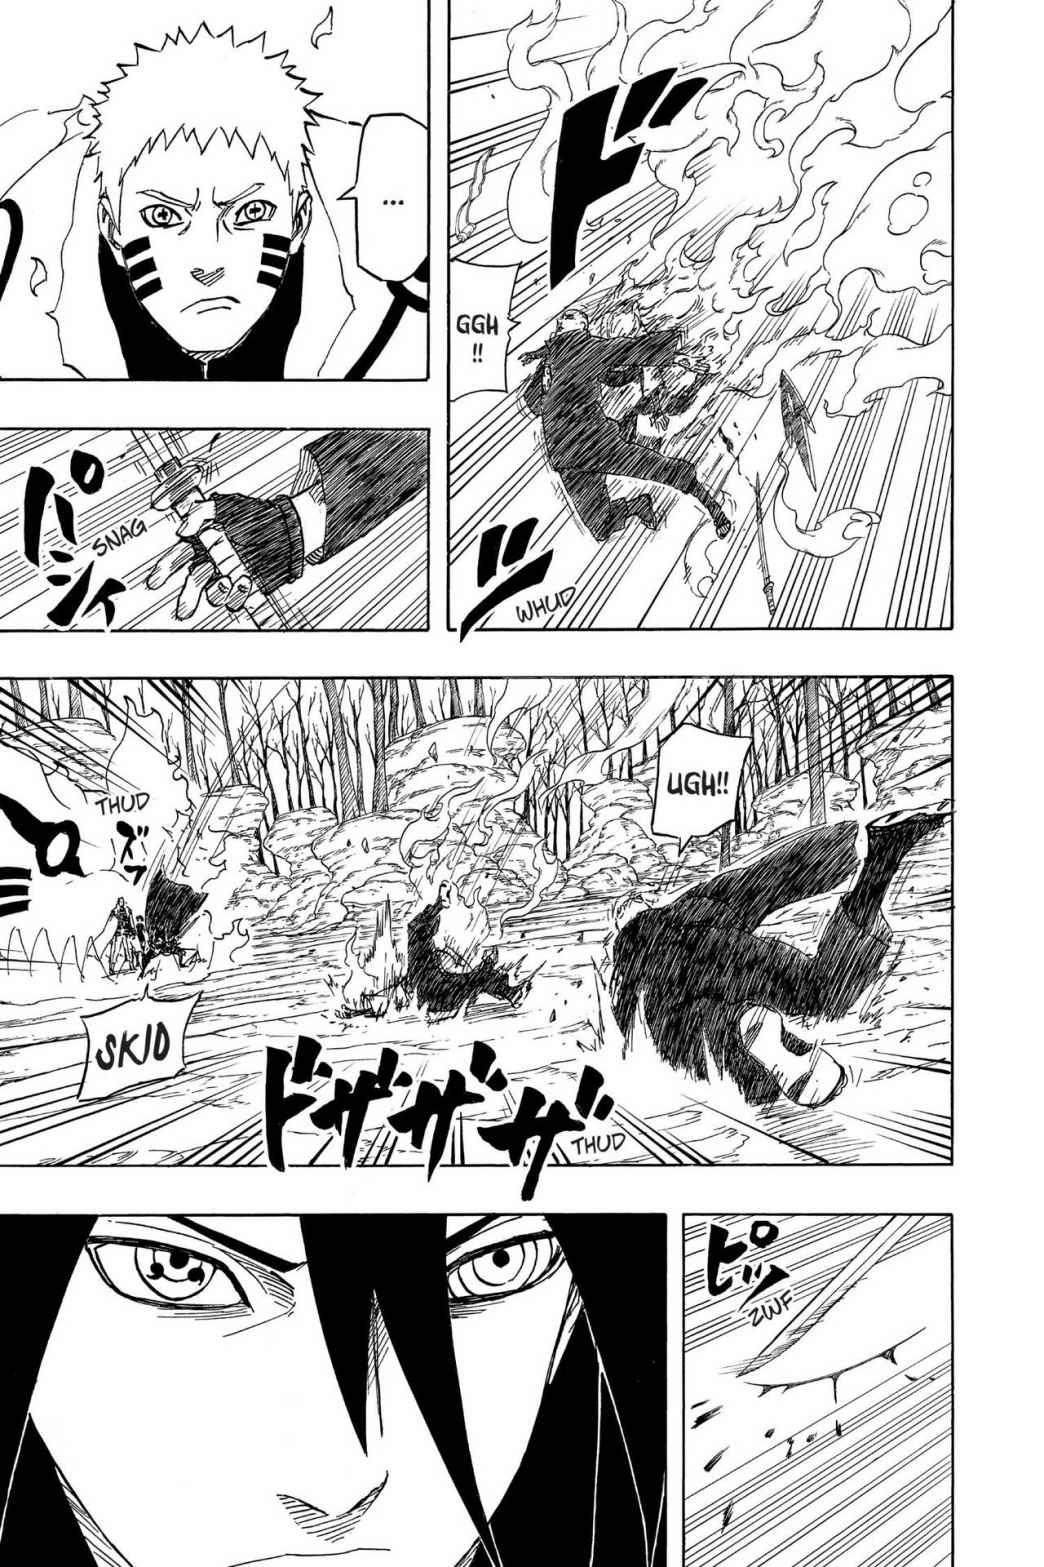 Sakura (Boruto) vs Naruto (Boruto/Sem Kurama)  - Página 6 0006-005